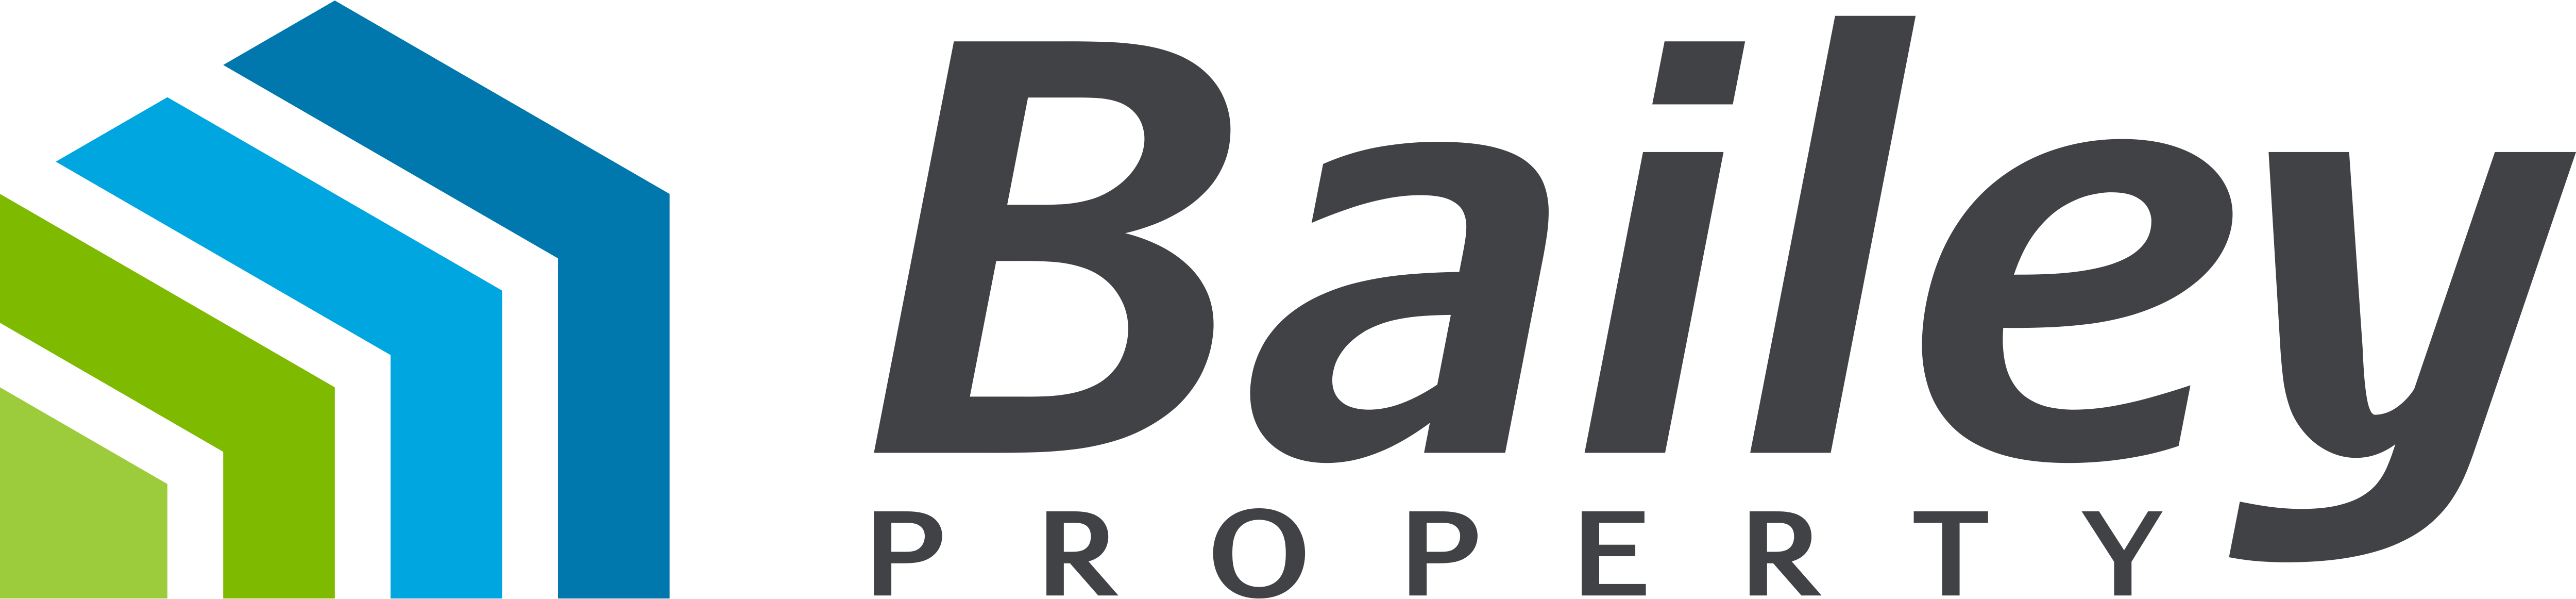 Bailey Property - logo